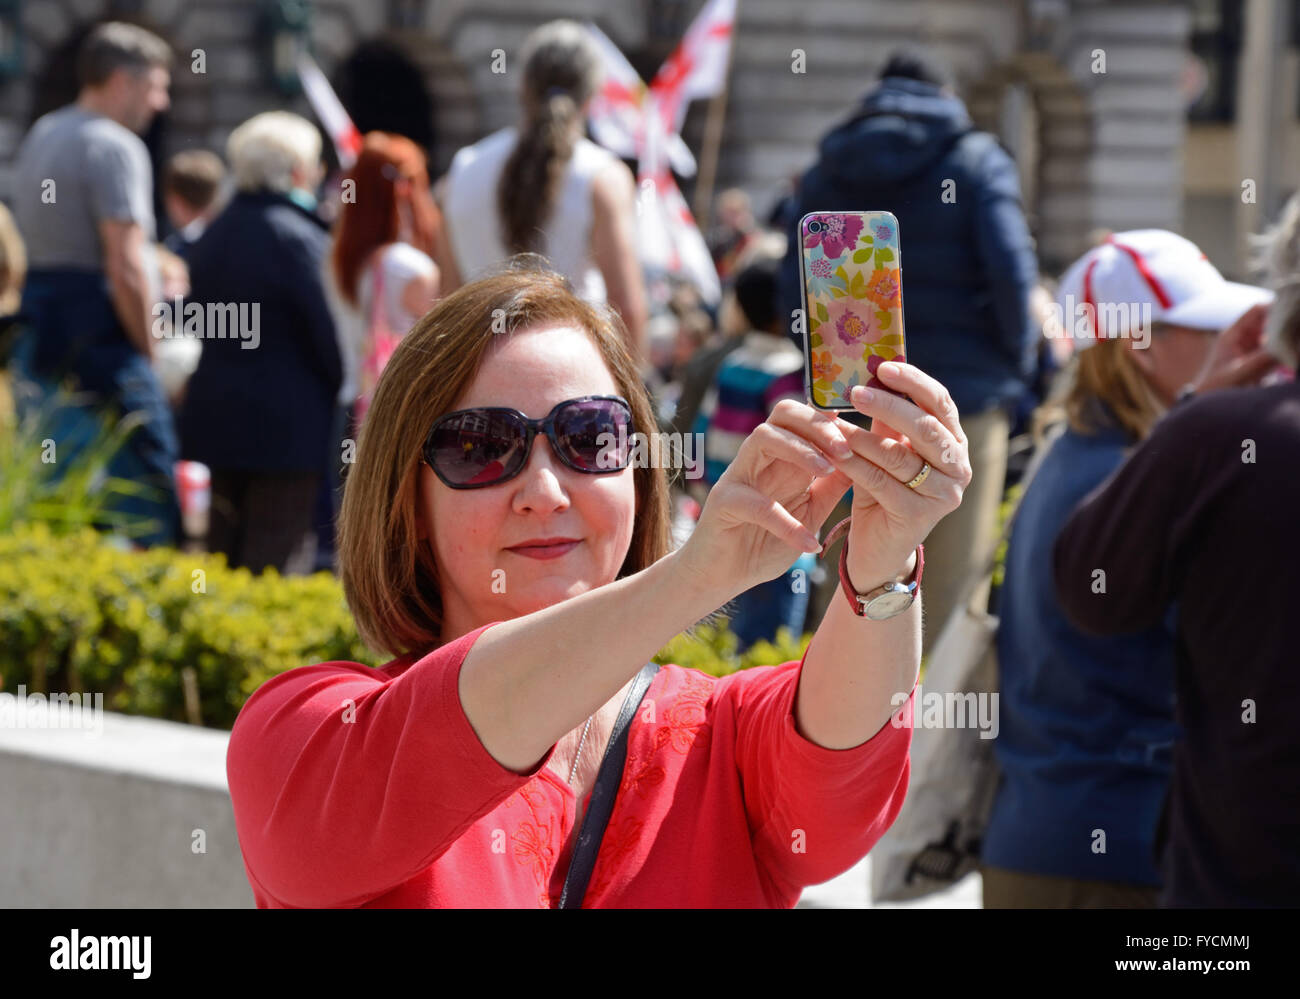 Lady taking selfie in a crowd. Stock Photo